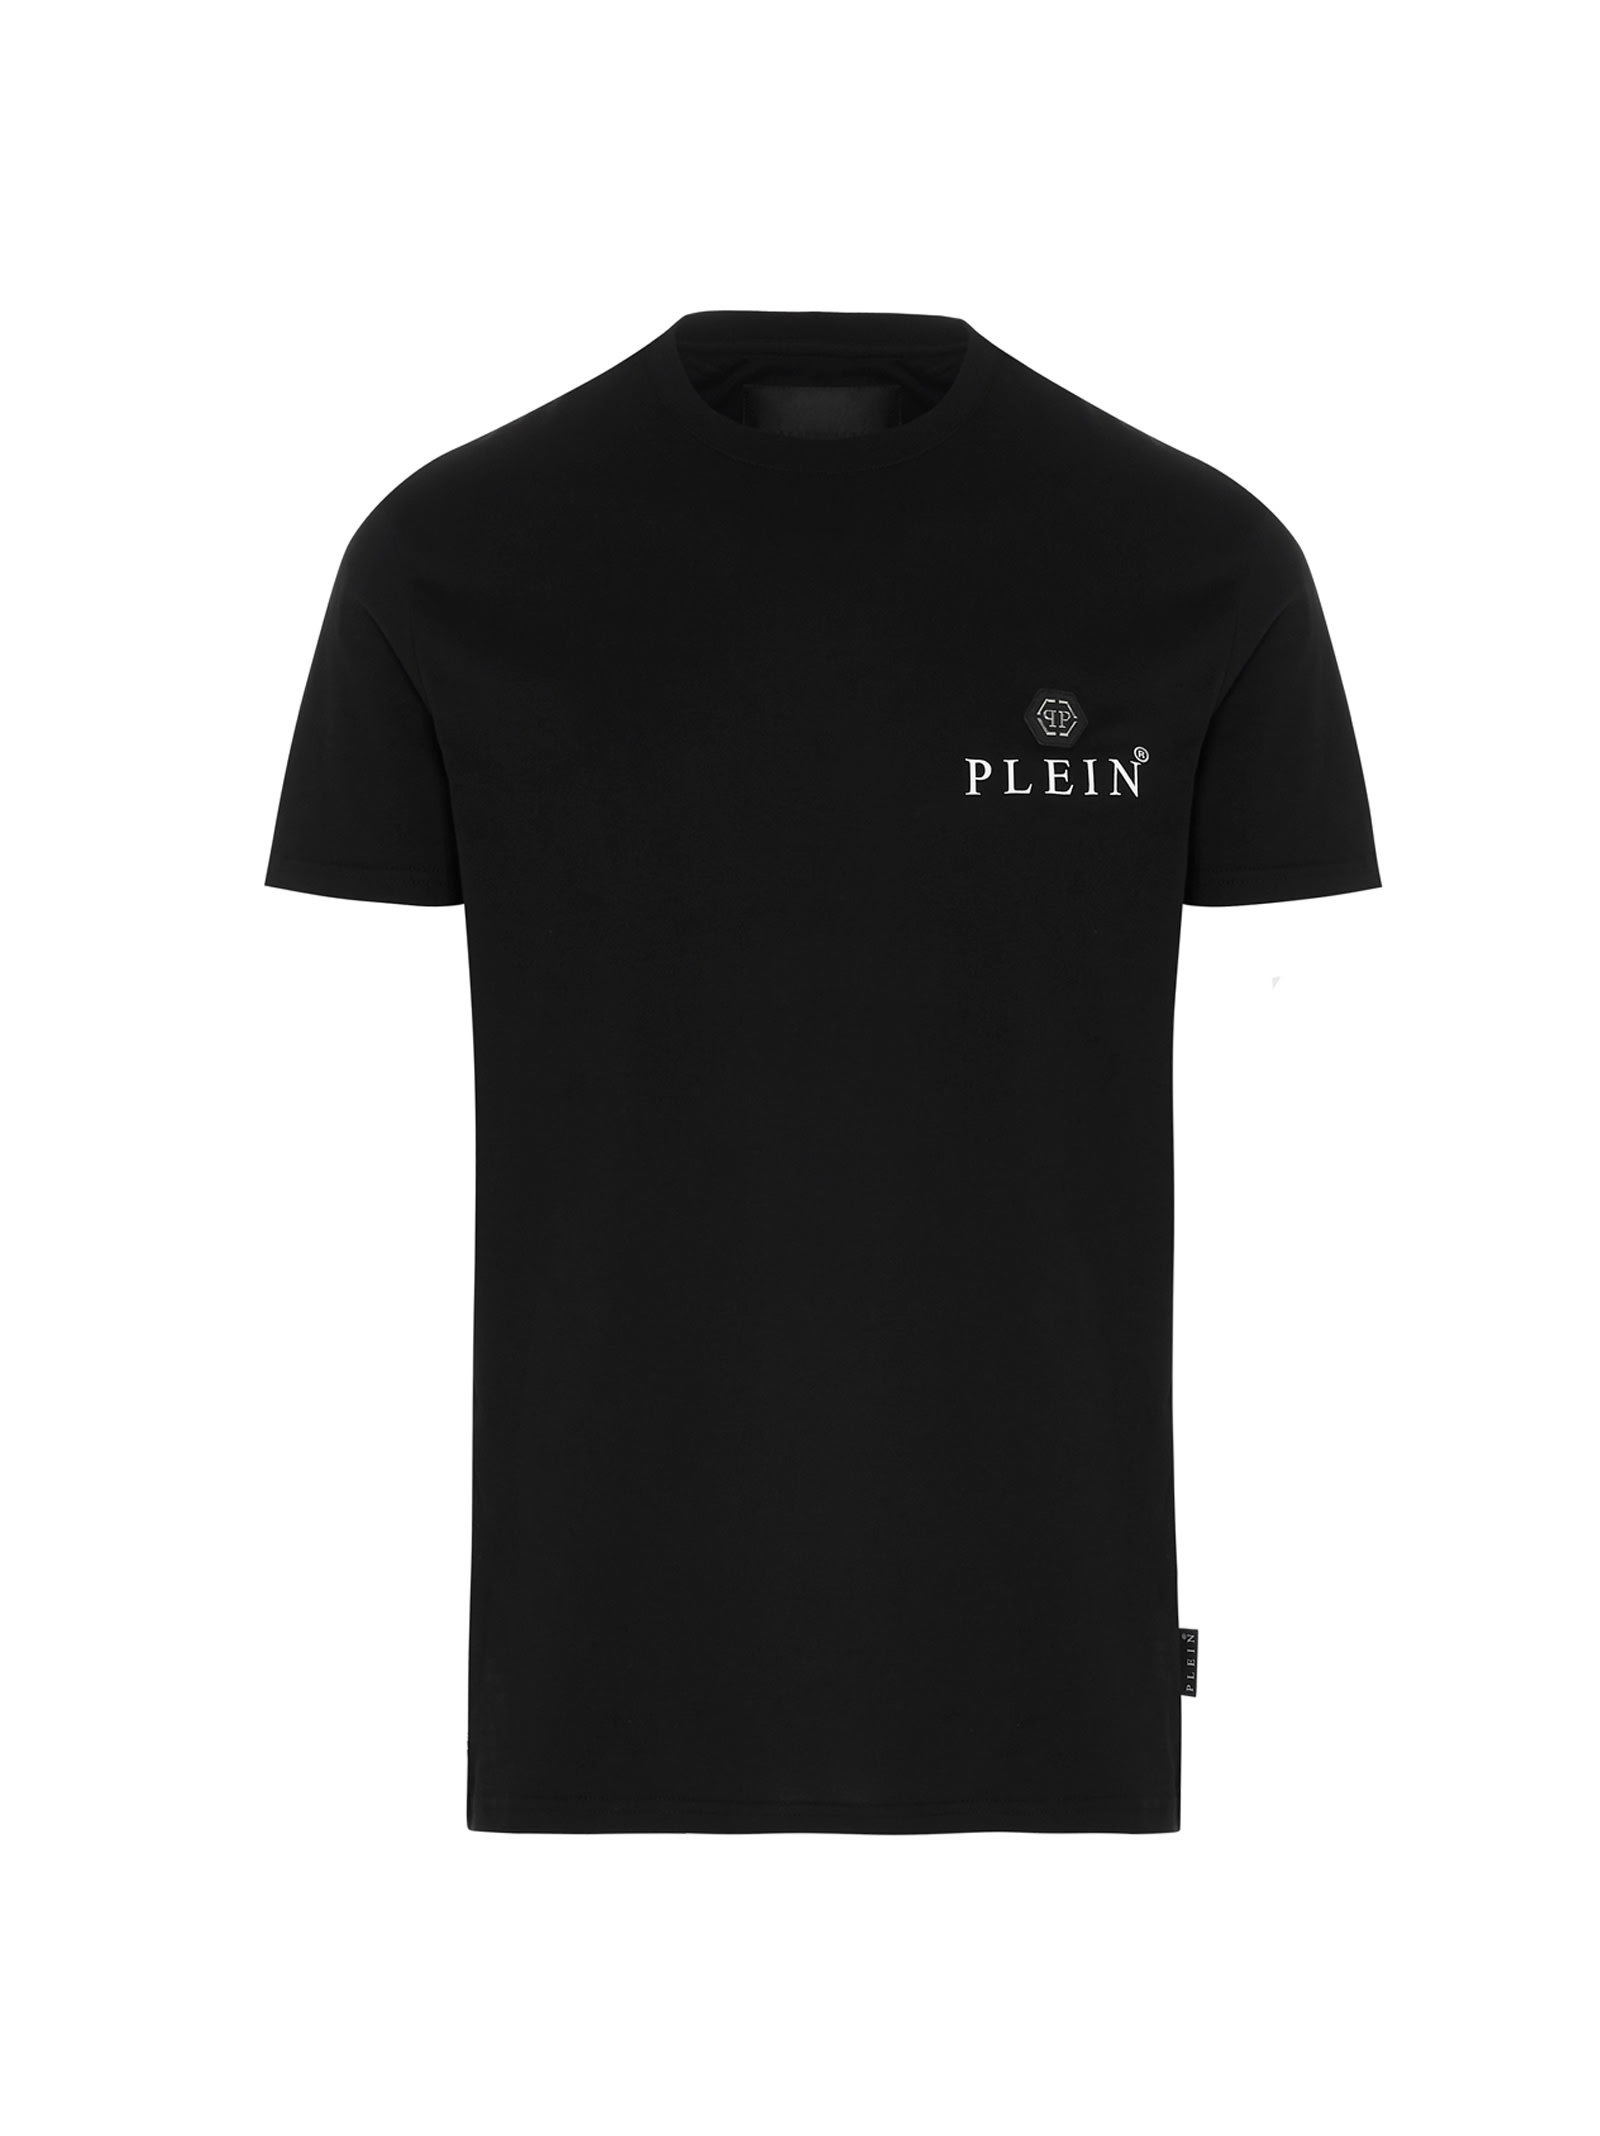 Philipp Plein iconic T-shirt